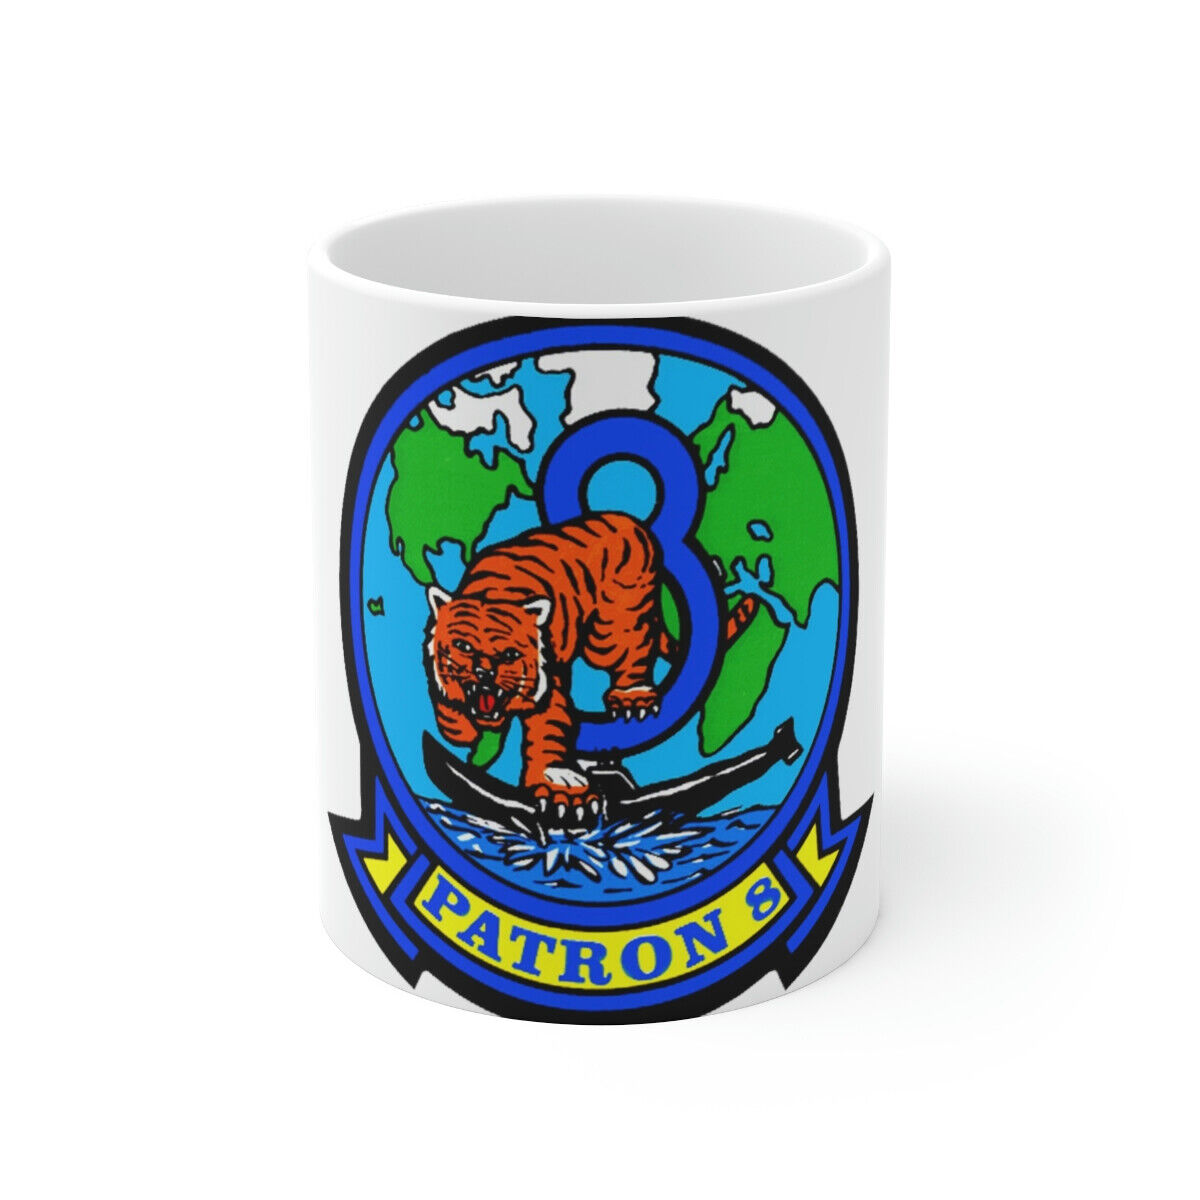 VP 8 Fighting Tigers (U.S. Navy) White Coffee Cup 11oz